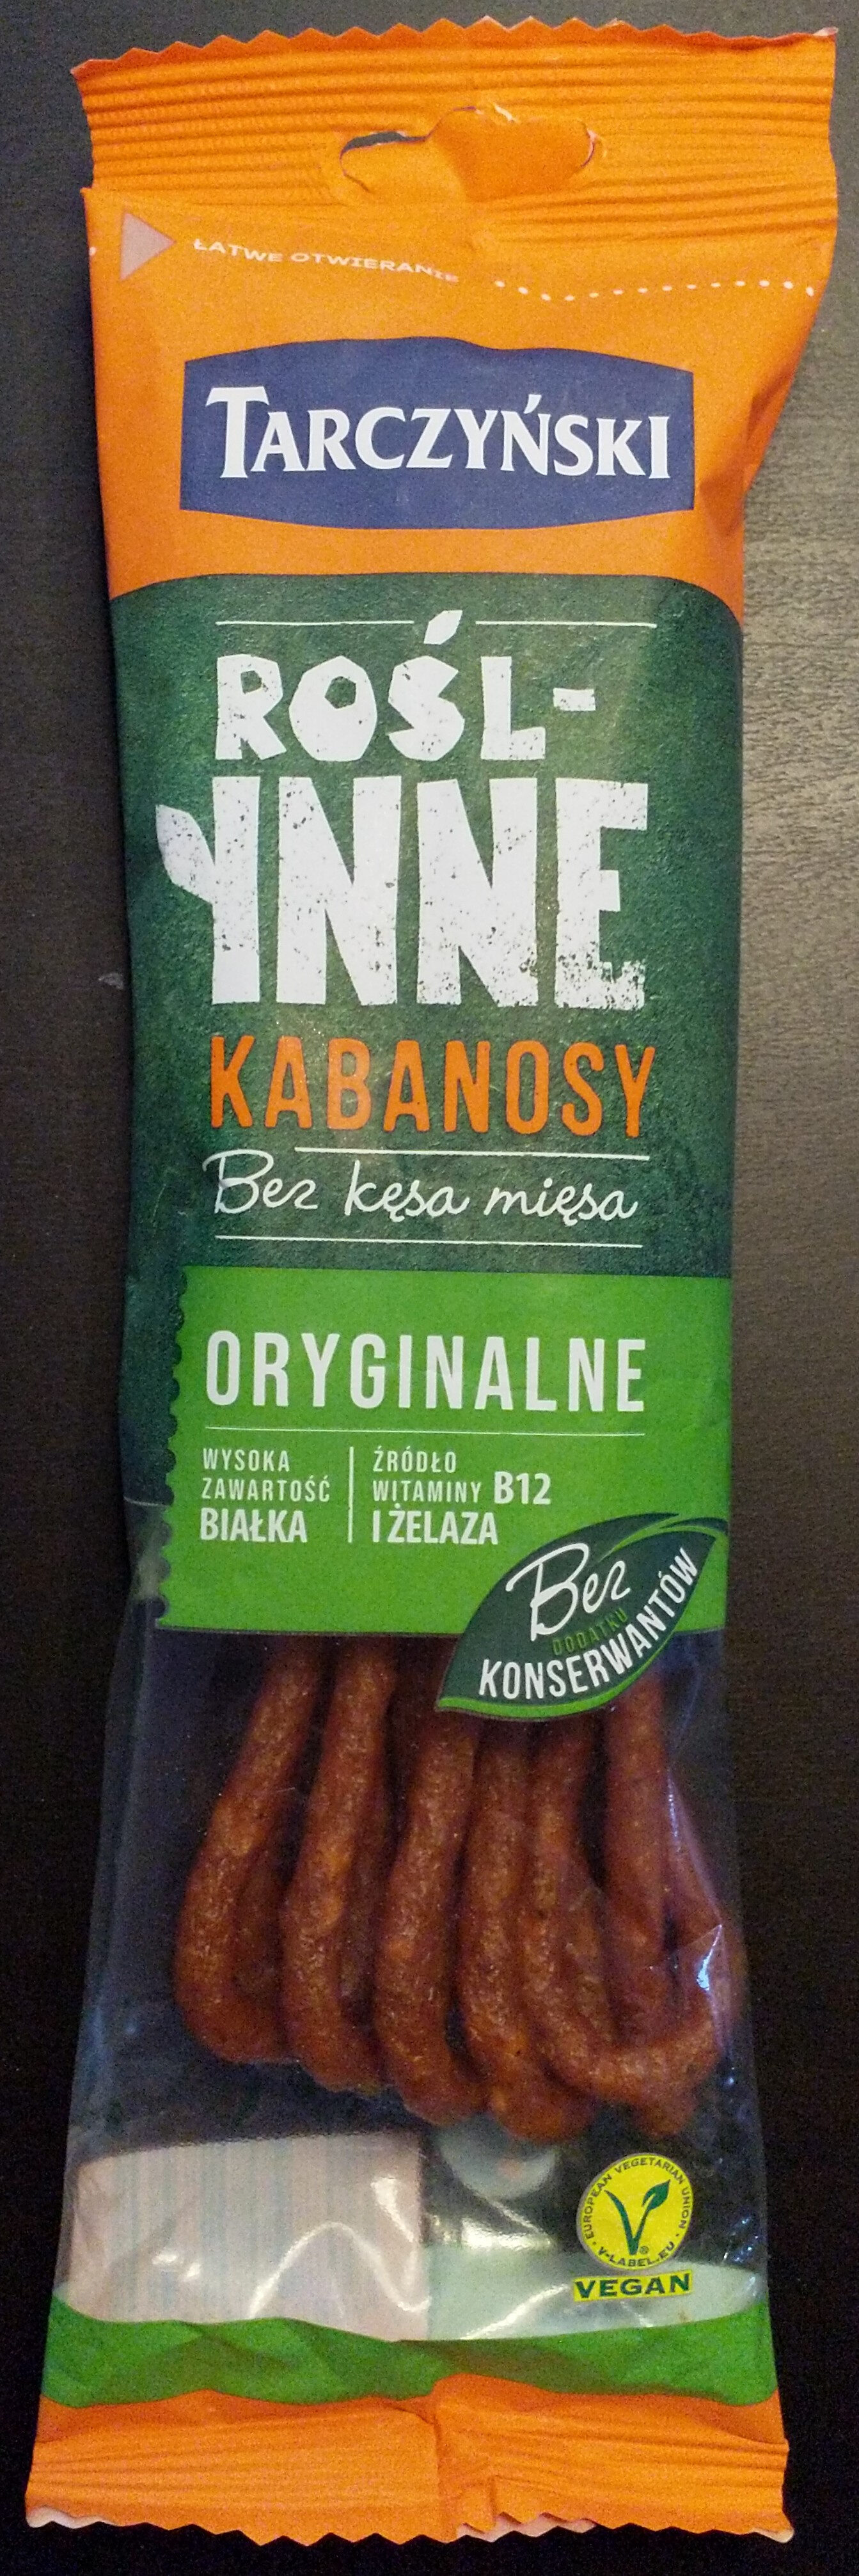 Rośl-inne Kabanosy Oryginalne - Produkt - pl